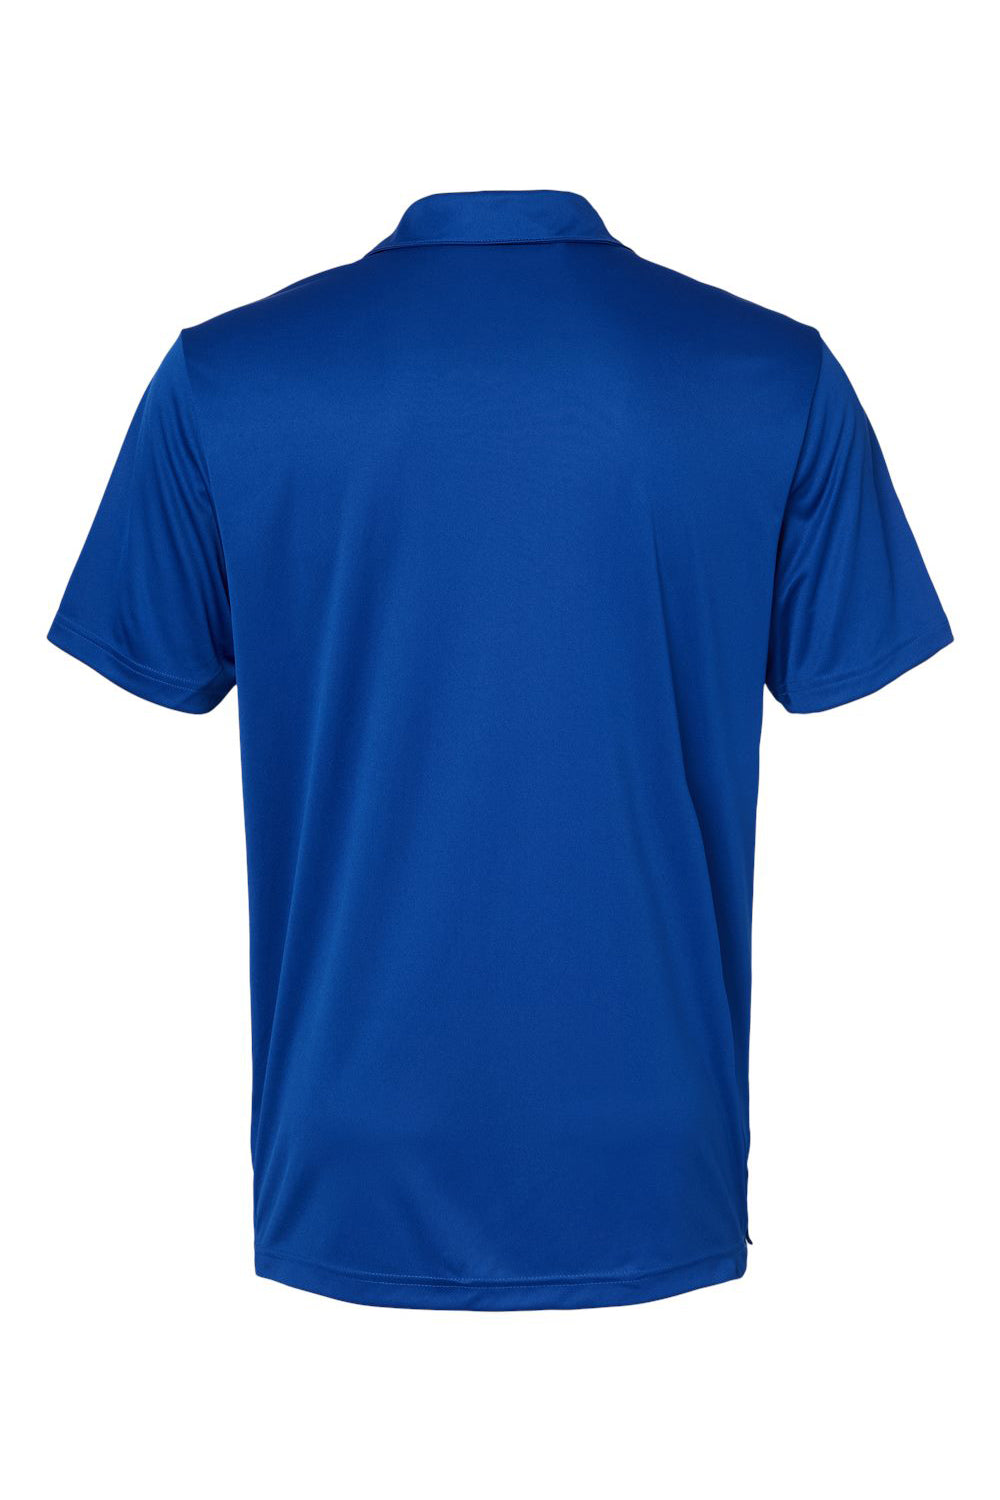 Adidas A324 Mens 3 Stripes Short Sleeve Polo Shirt Collegiate Royal Blue/Grey Flat Back